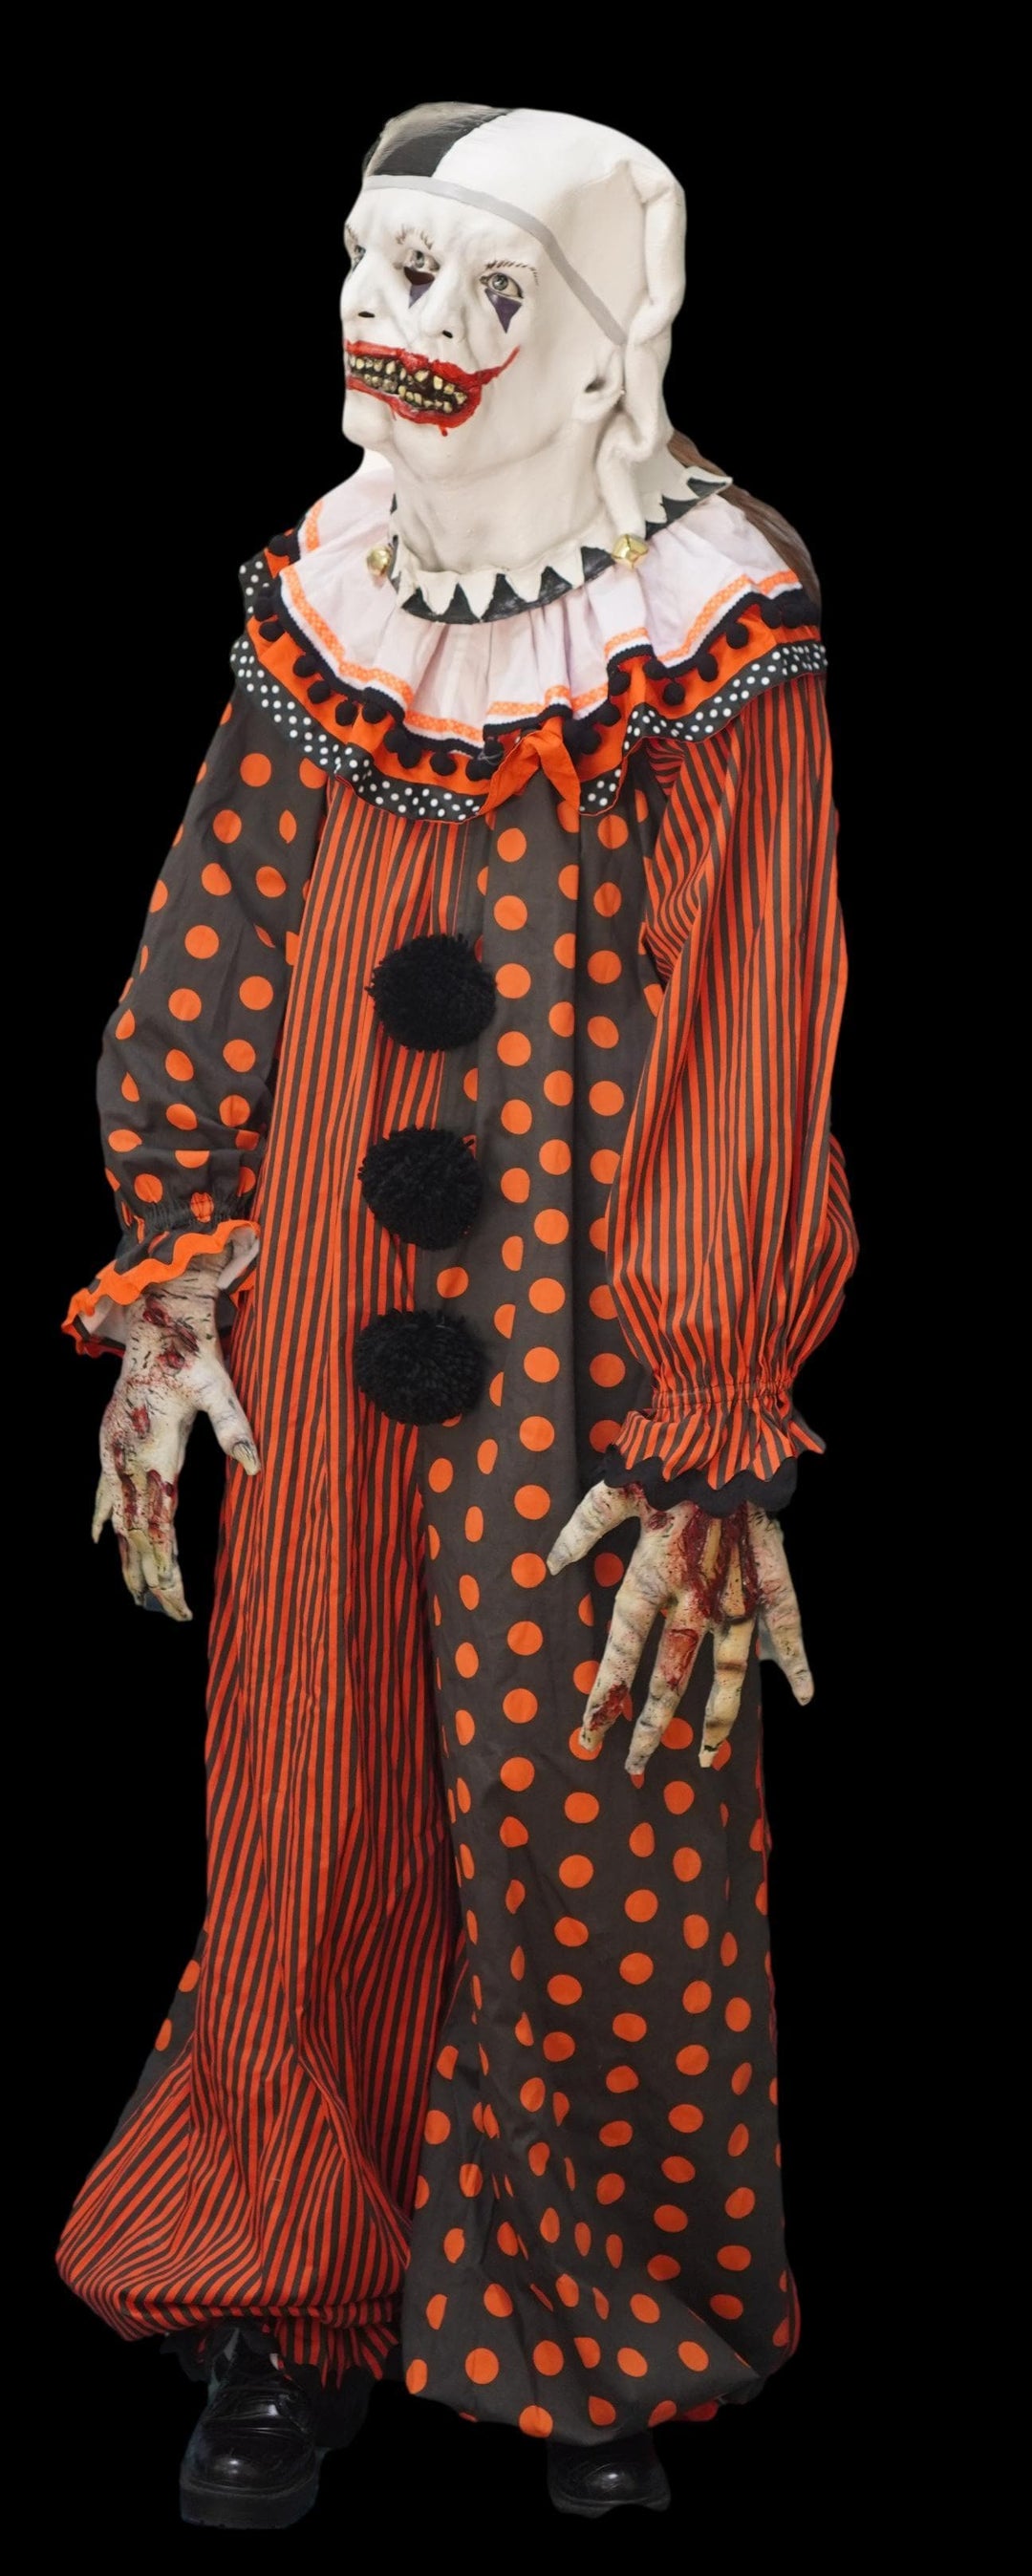 "Movie Clown Suit" in Orange Halloween Costume